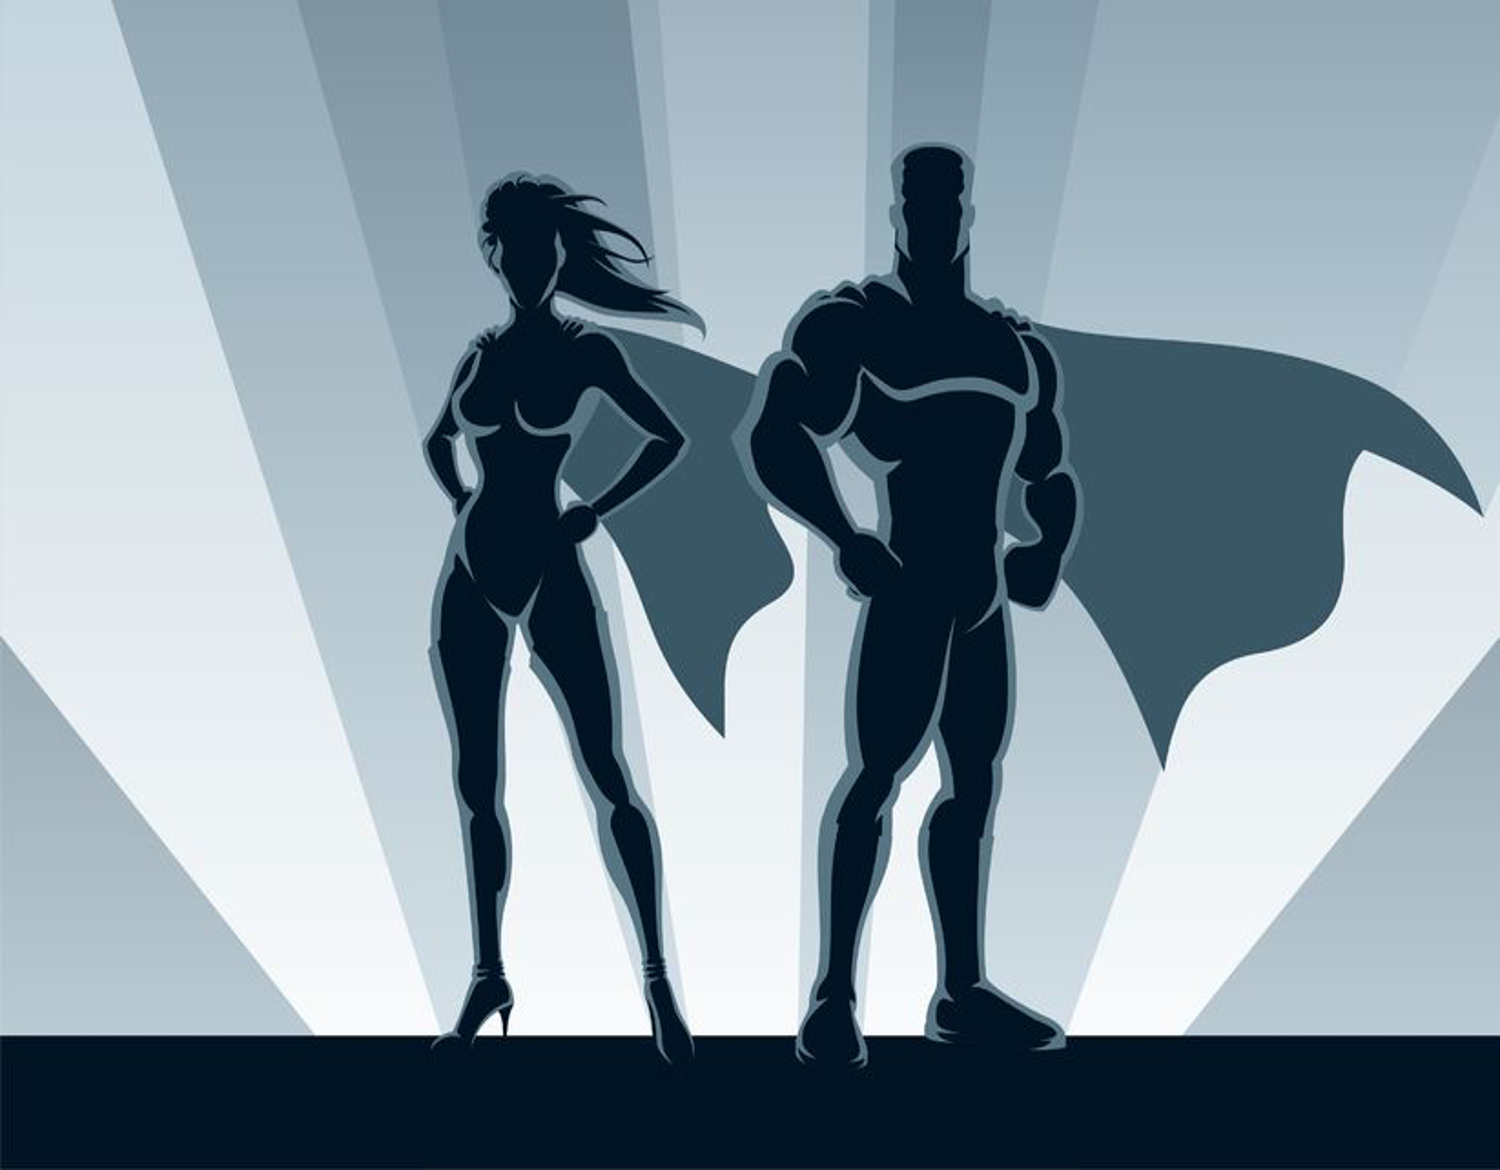 Superheroes stylized graphic